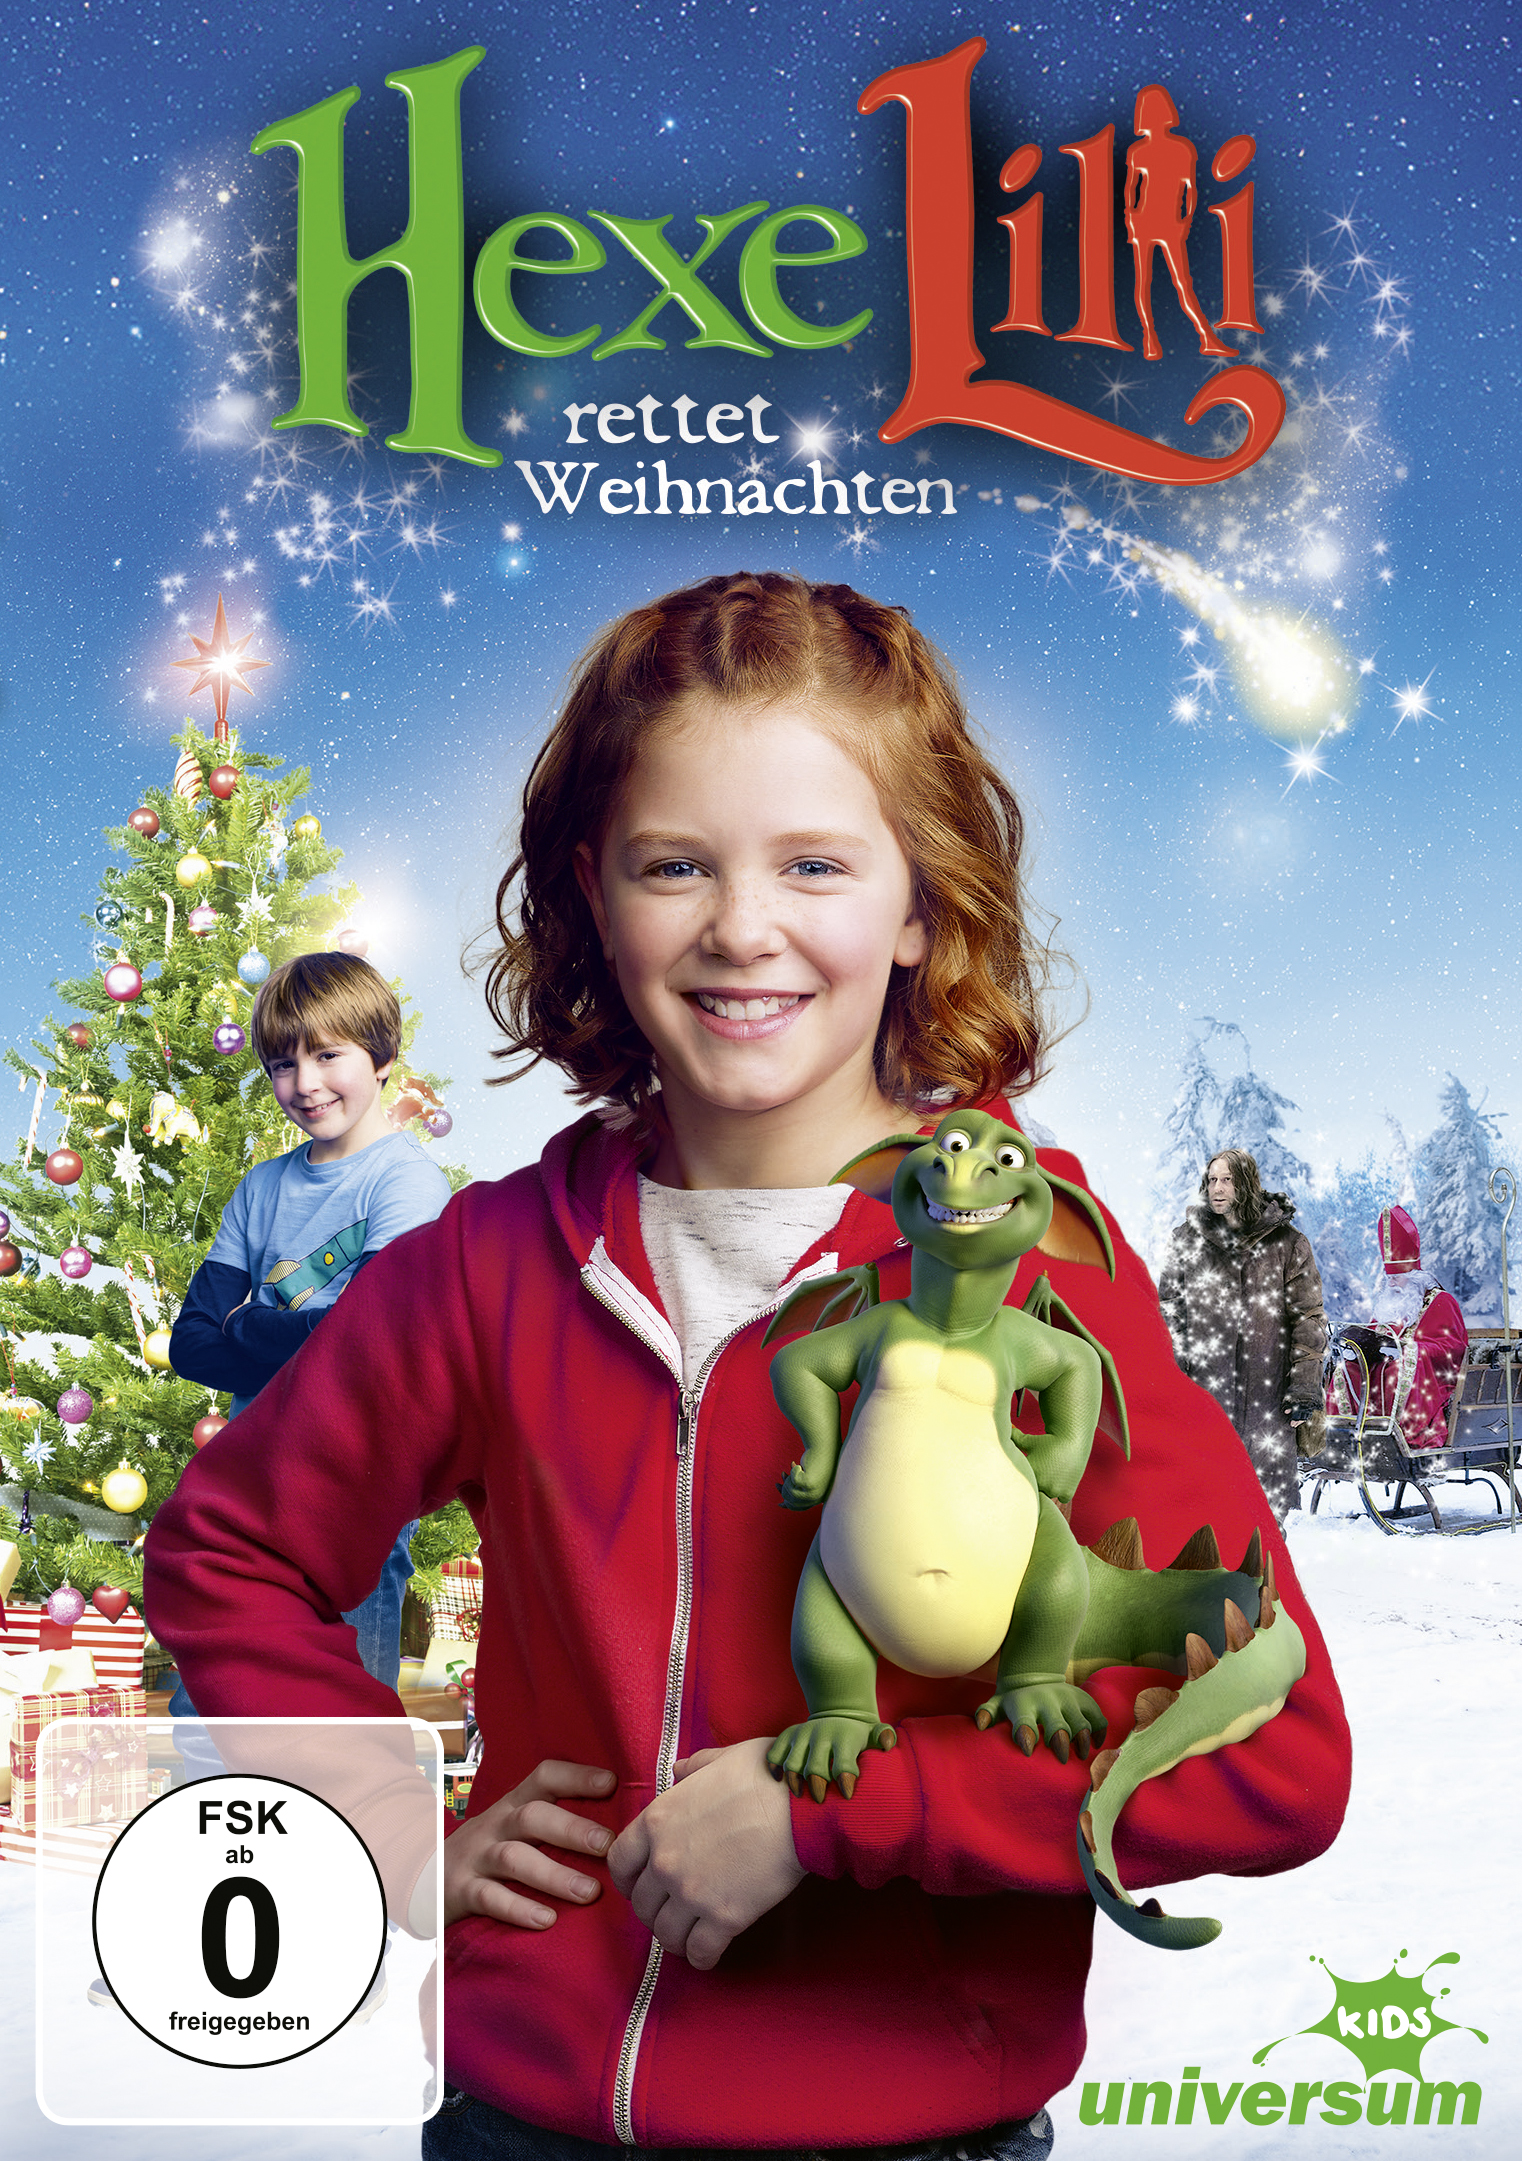 Lilli DVD Hexe Weihnachten rettet